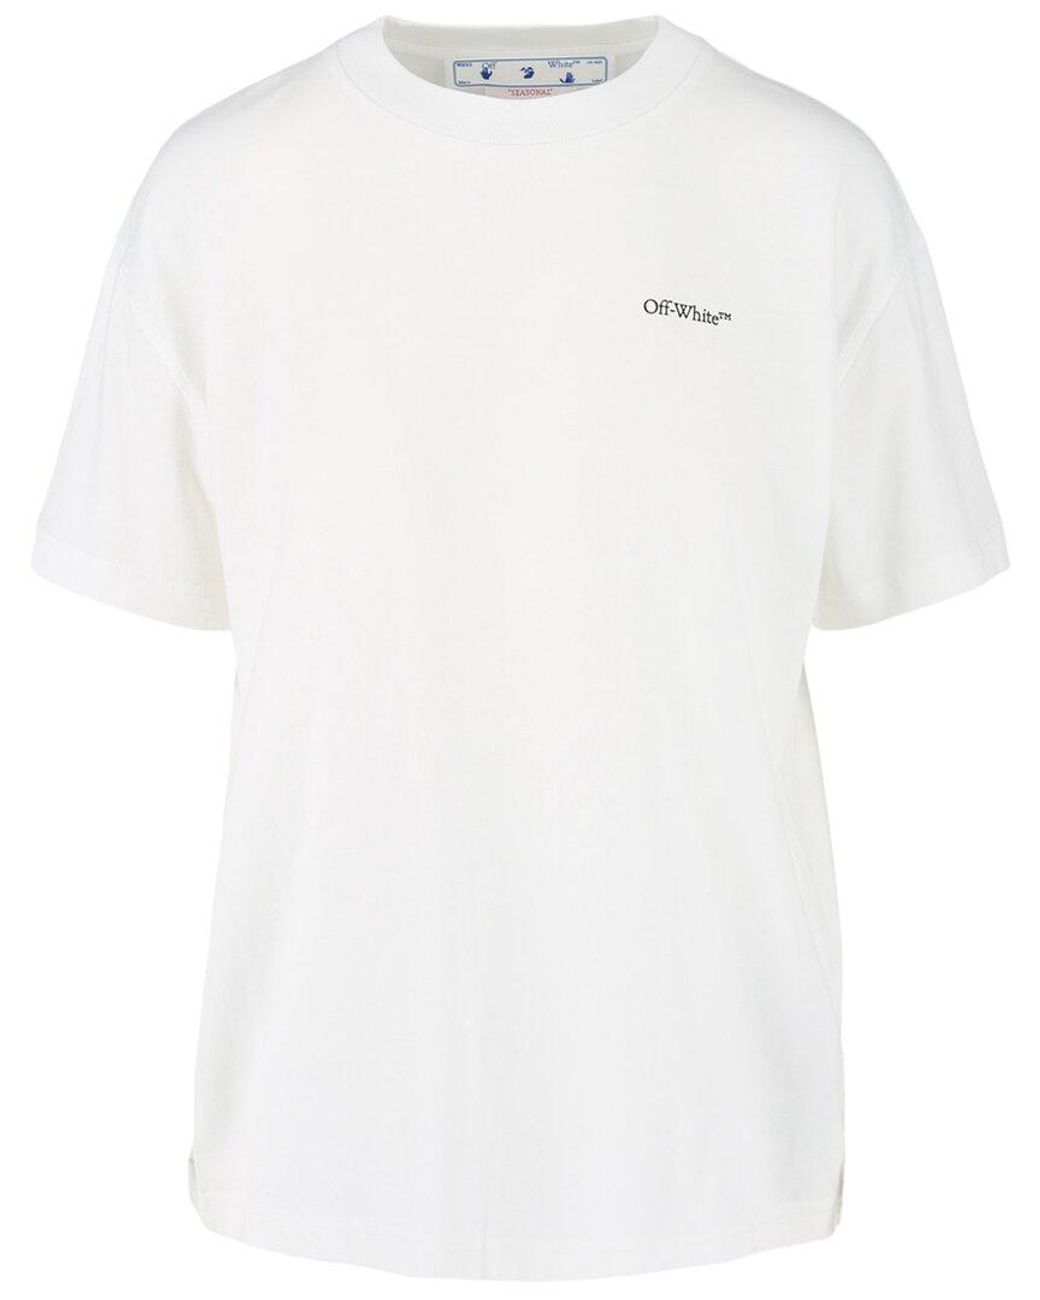 Off-White c/o Virgil Abloh Off-whitetm Logo Print T-shirt | Lyst